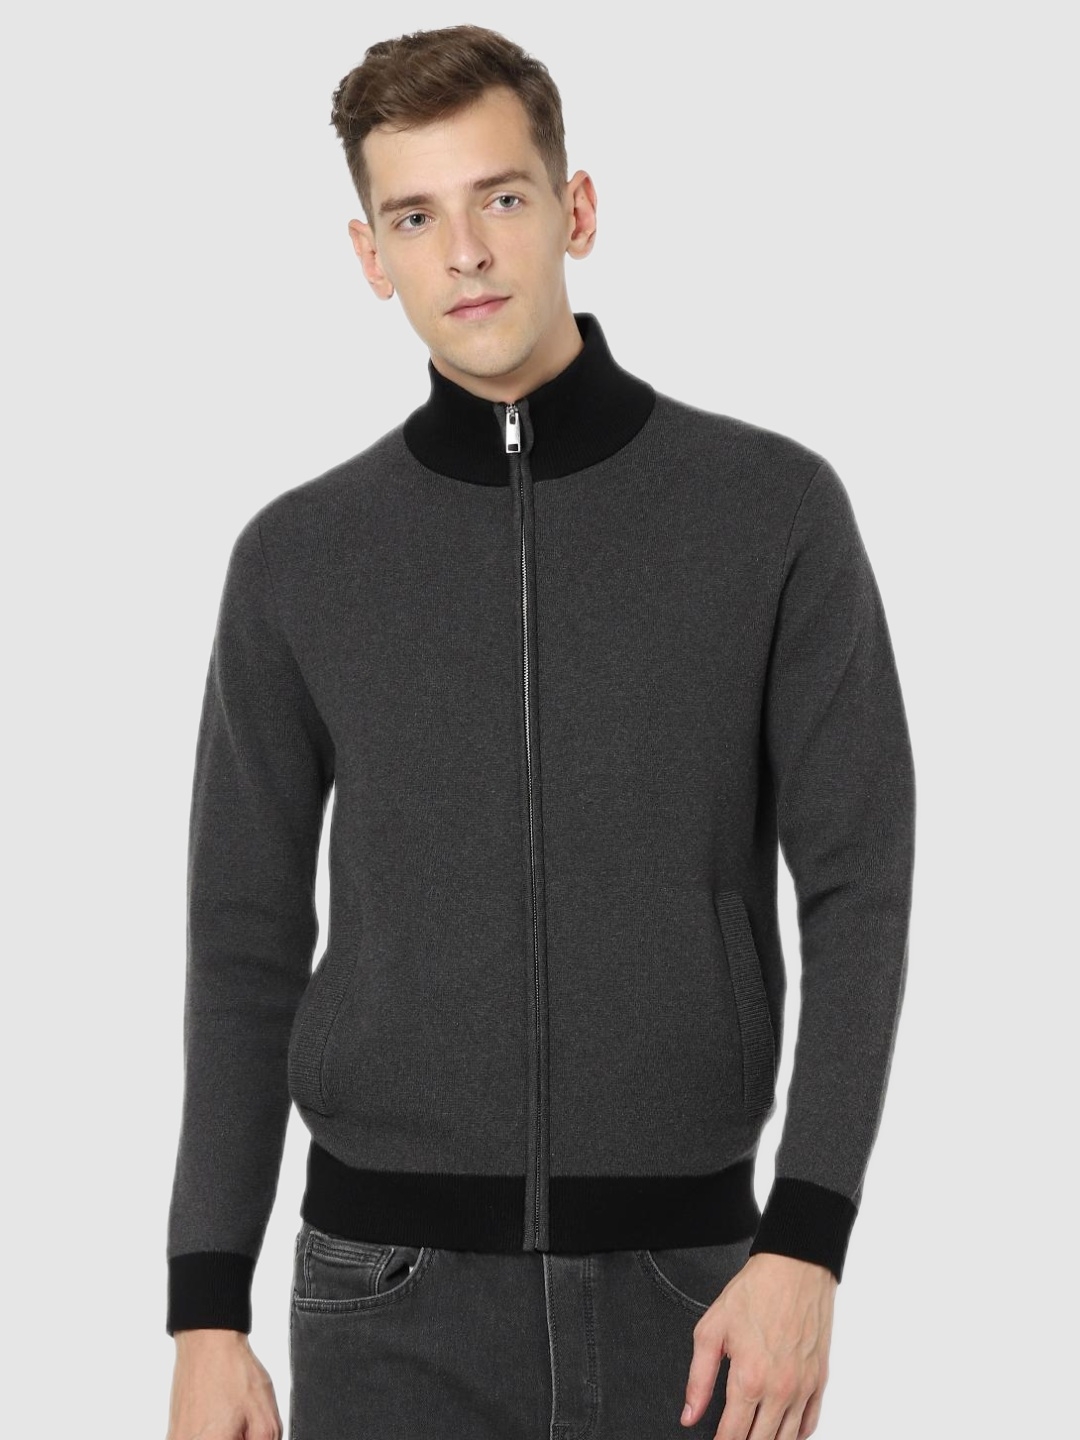 Men's Grey Cotton Textured Sweaters